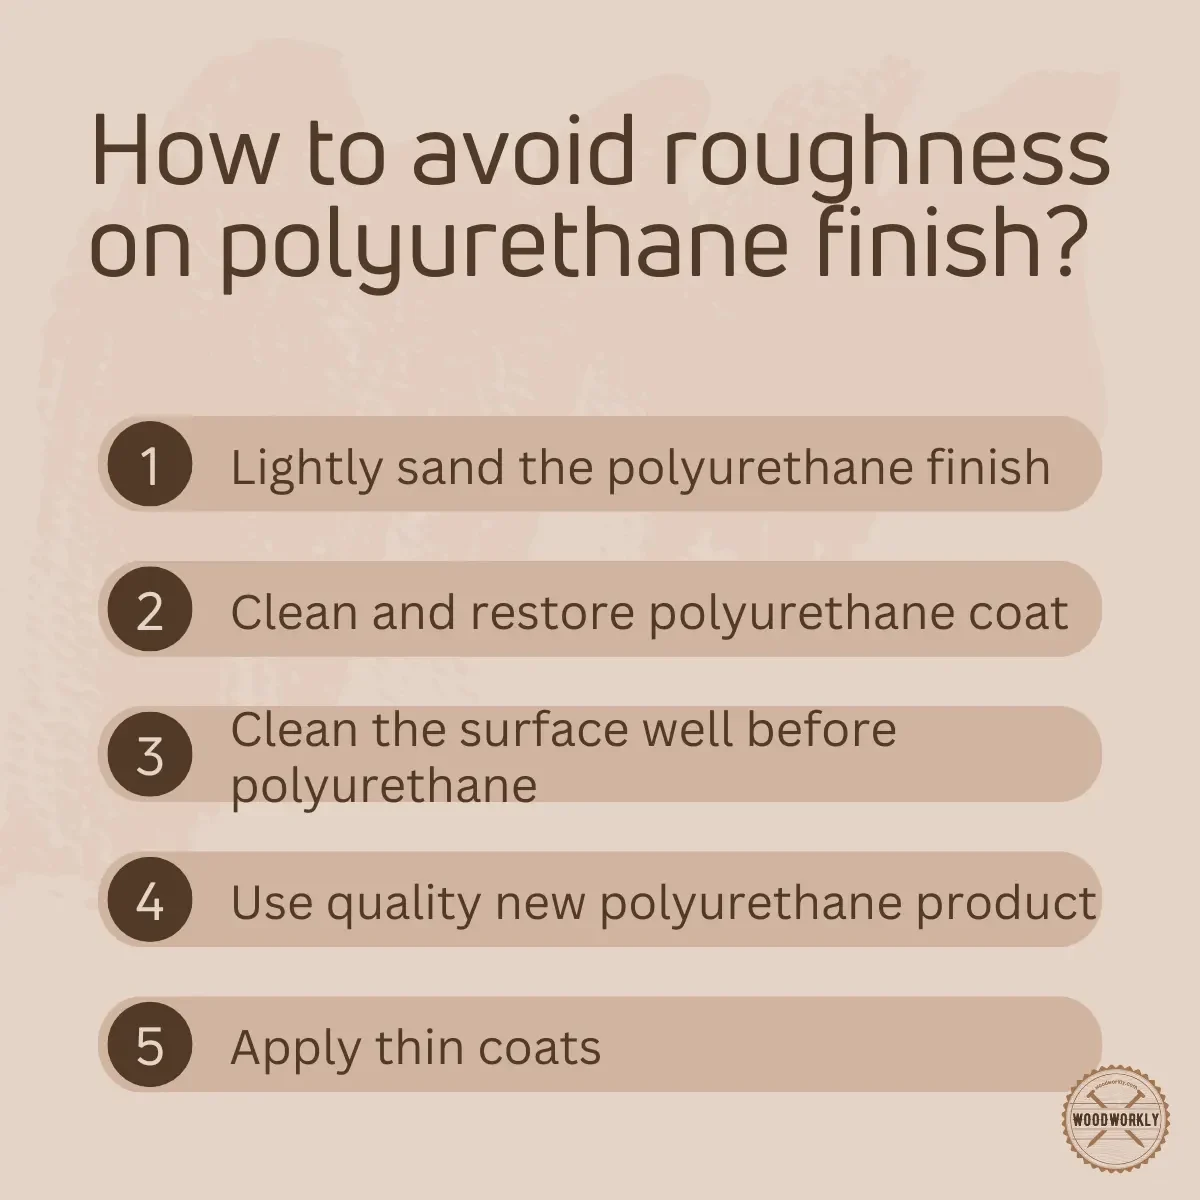 How to avoid roughness on polyurethane finish